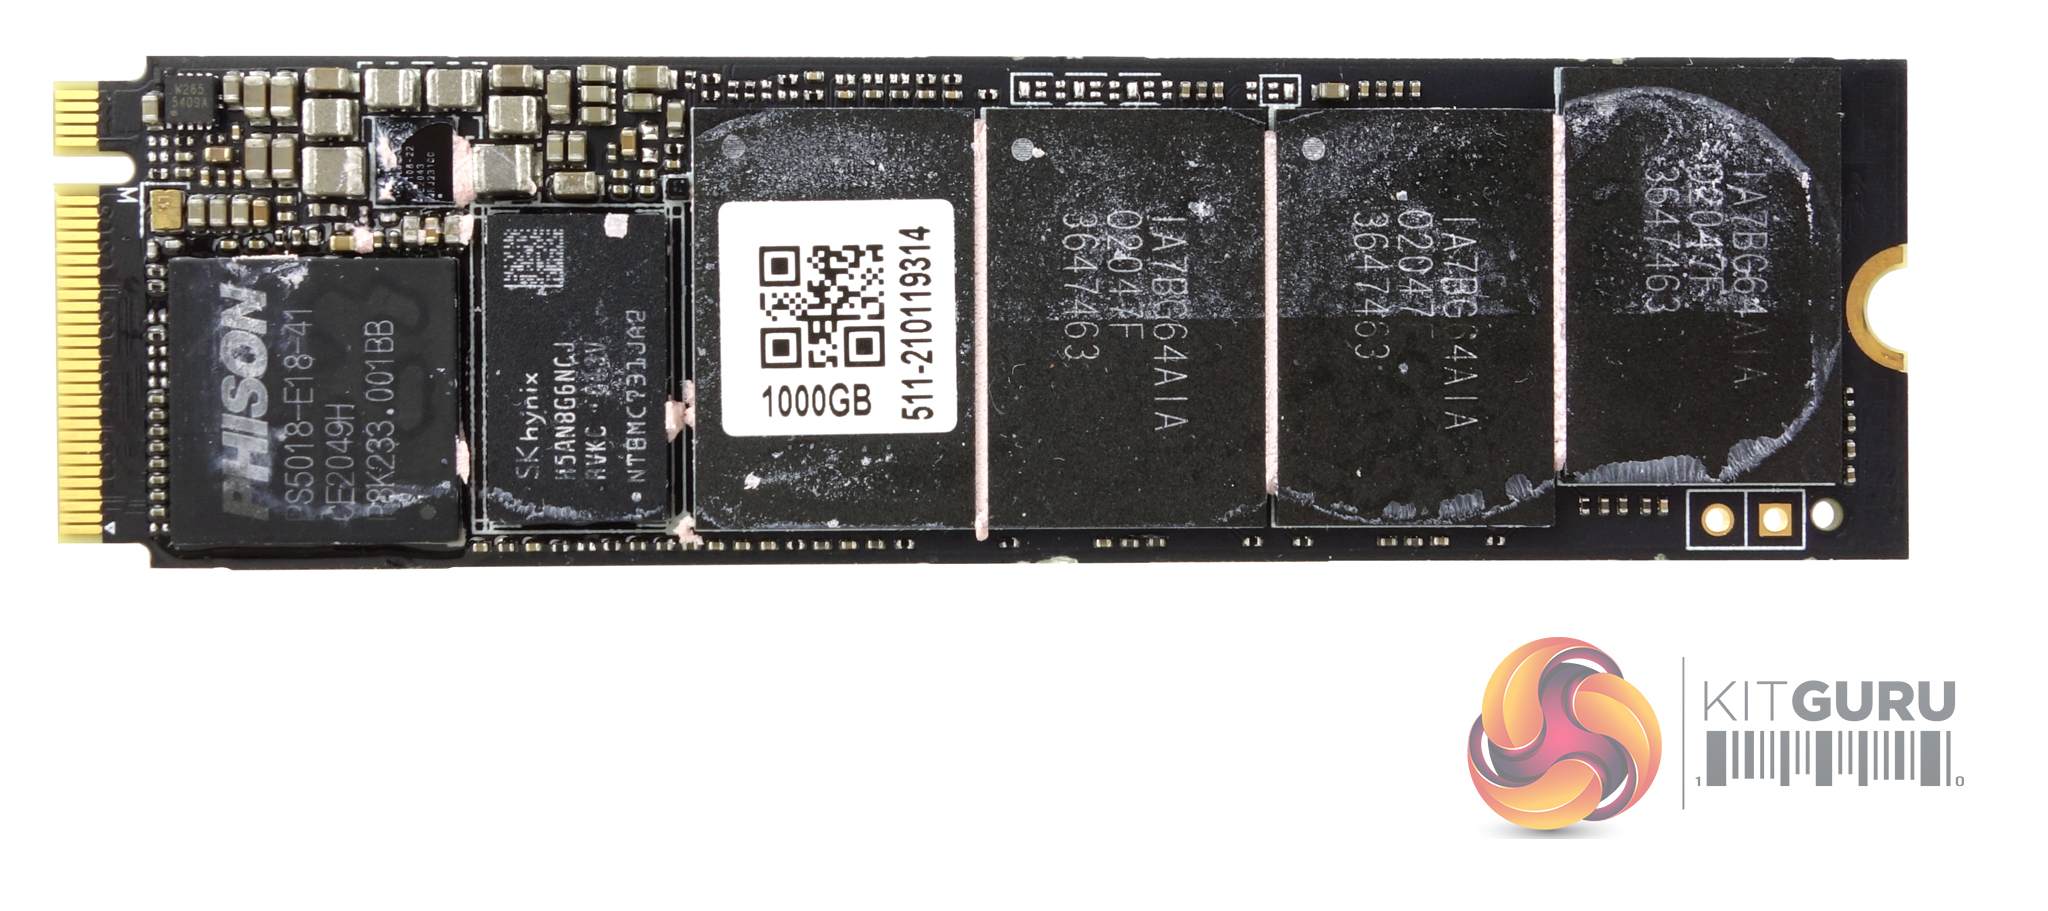 PNY CS3140 M.2 - Disque SSD PNY 